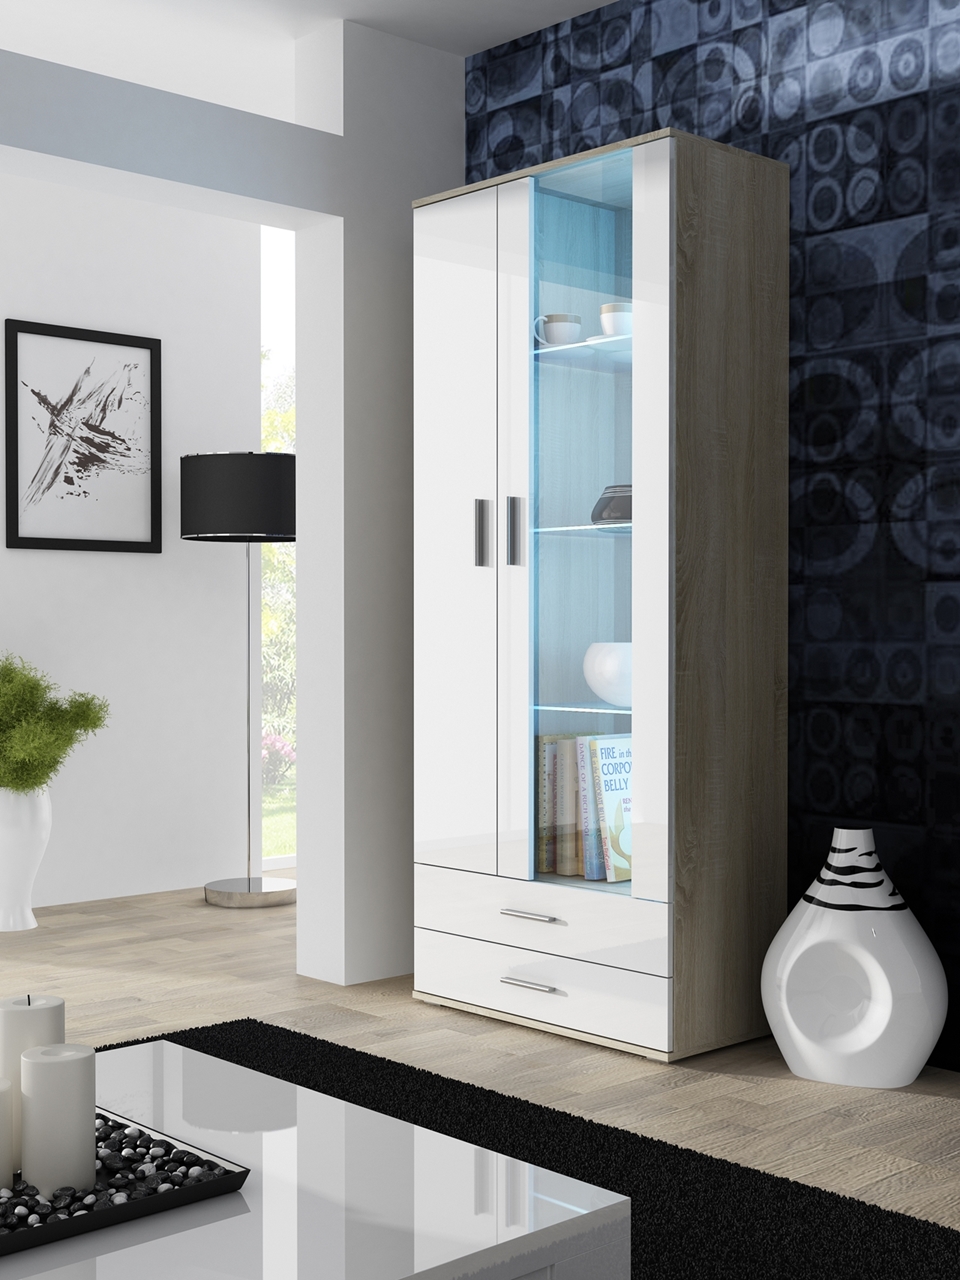 Display cabinet SOHO SH7E sonoma oak / white gloss